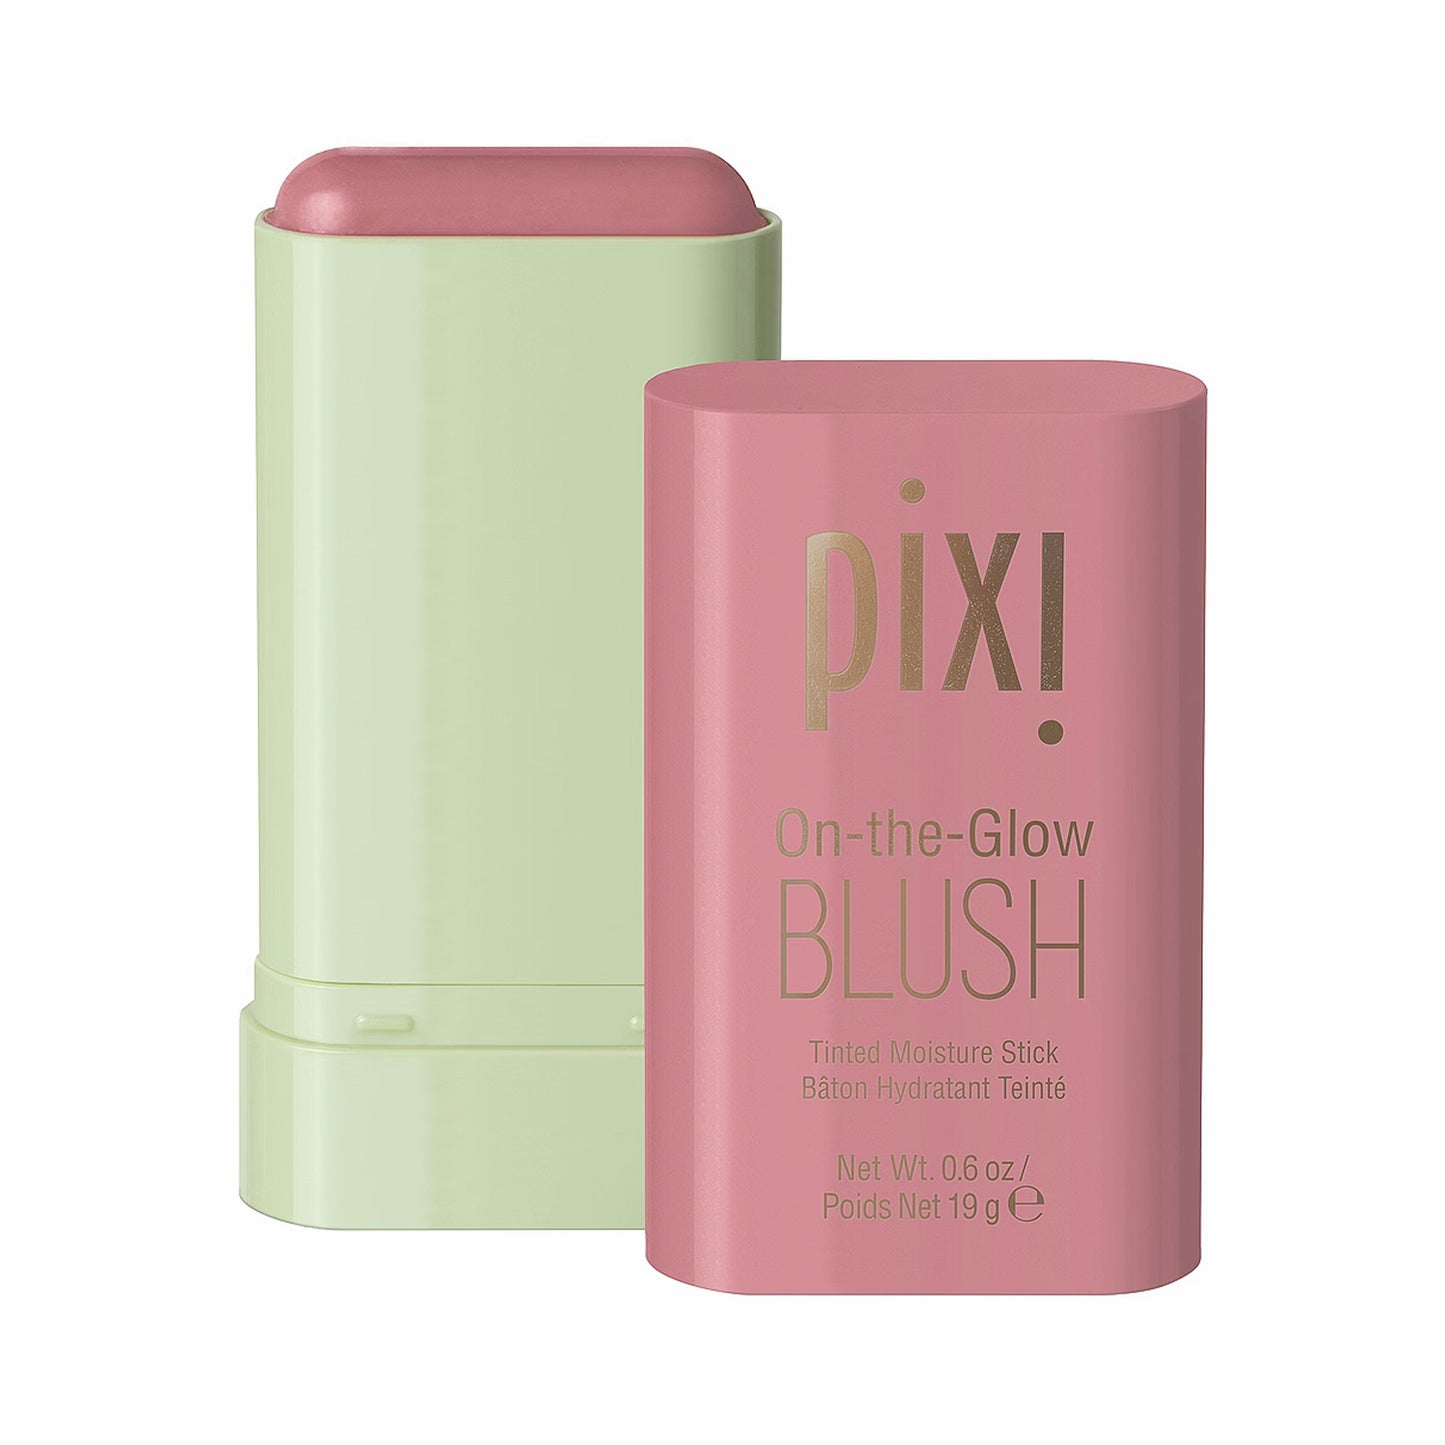 Pixi Beauty On-the-Glow Blush Fleur